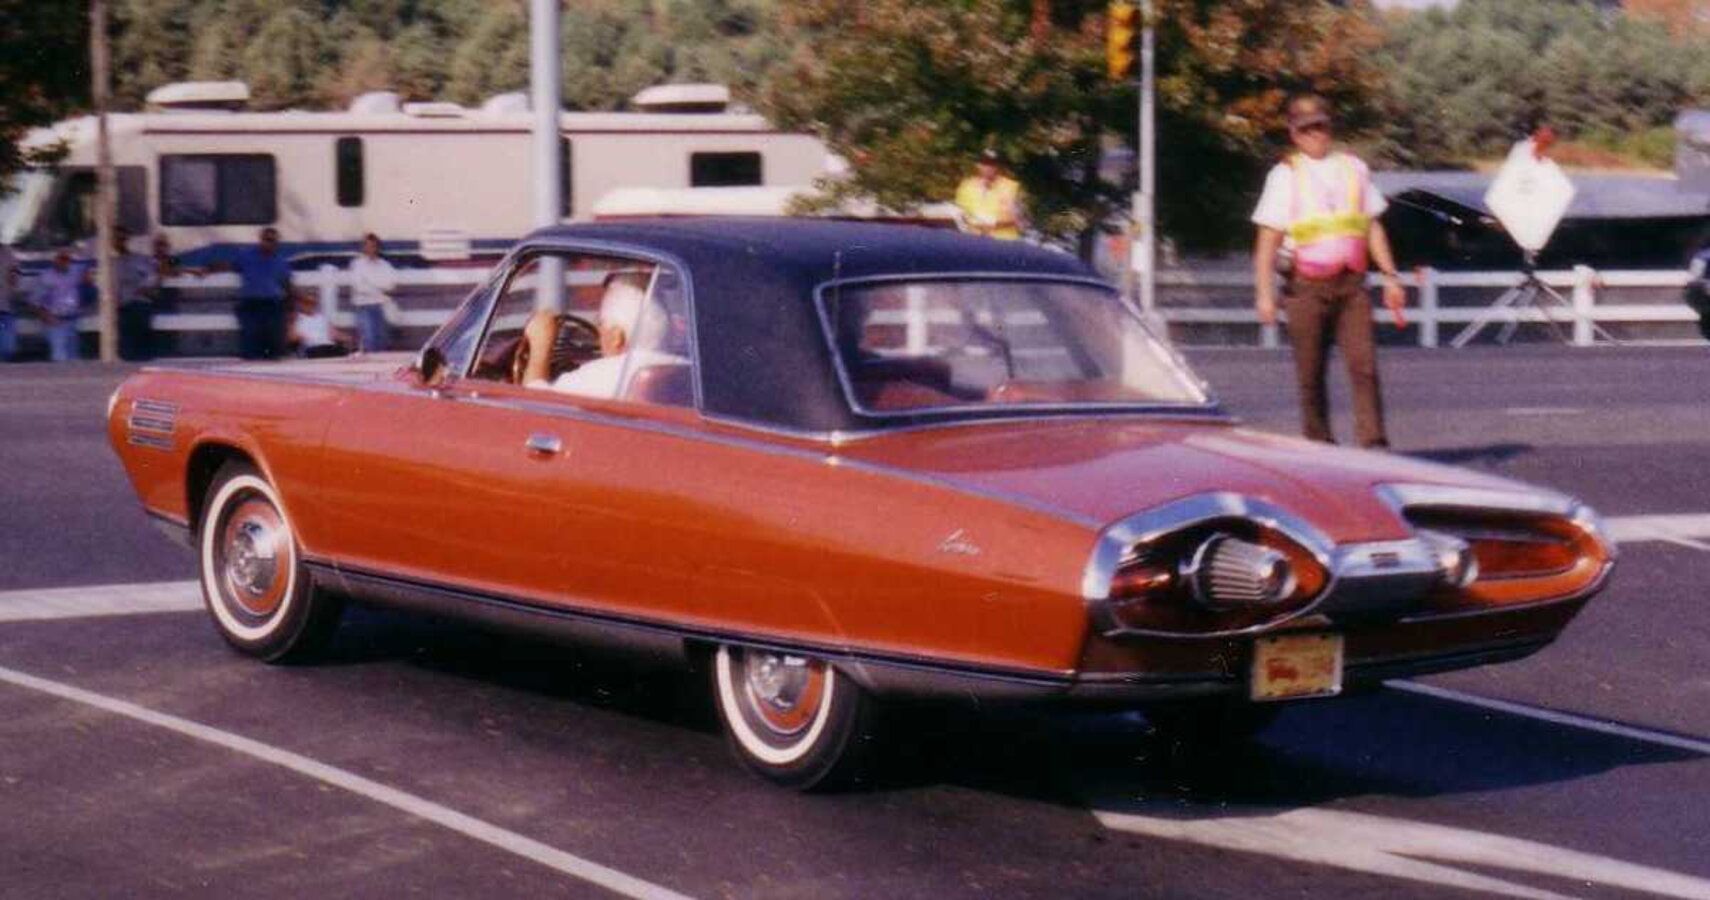 Here's the classic Chrysler Turbine Car